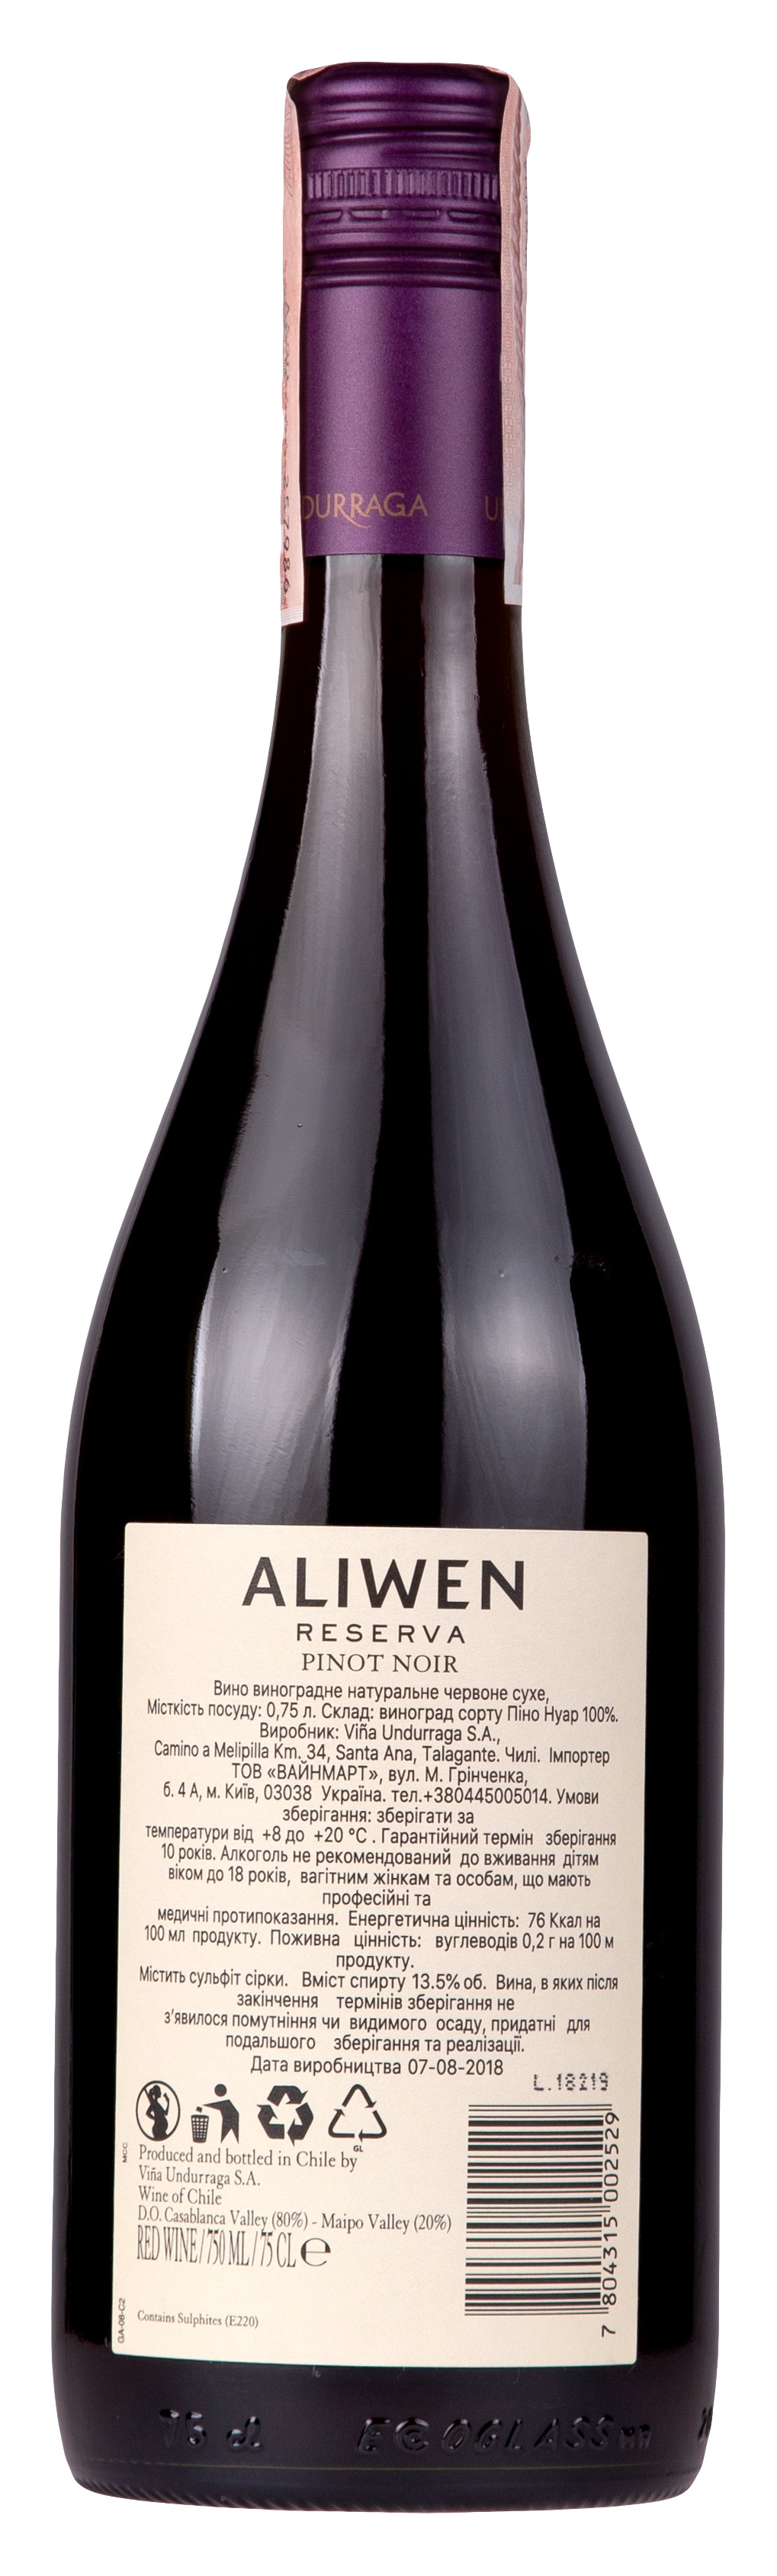 Undurraga Aliwen Pinot Noir Reserva 2017 Set 6 bottles - 2